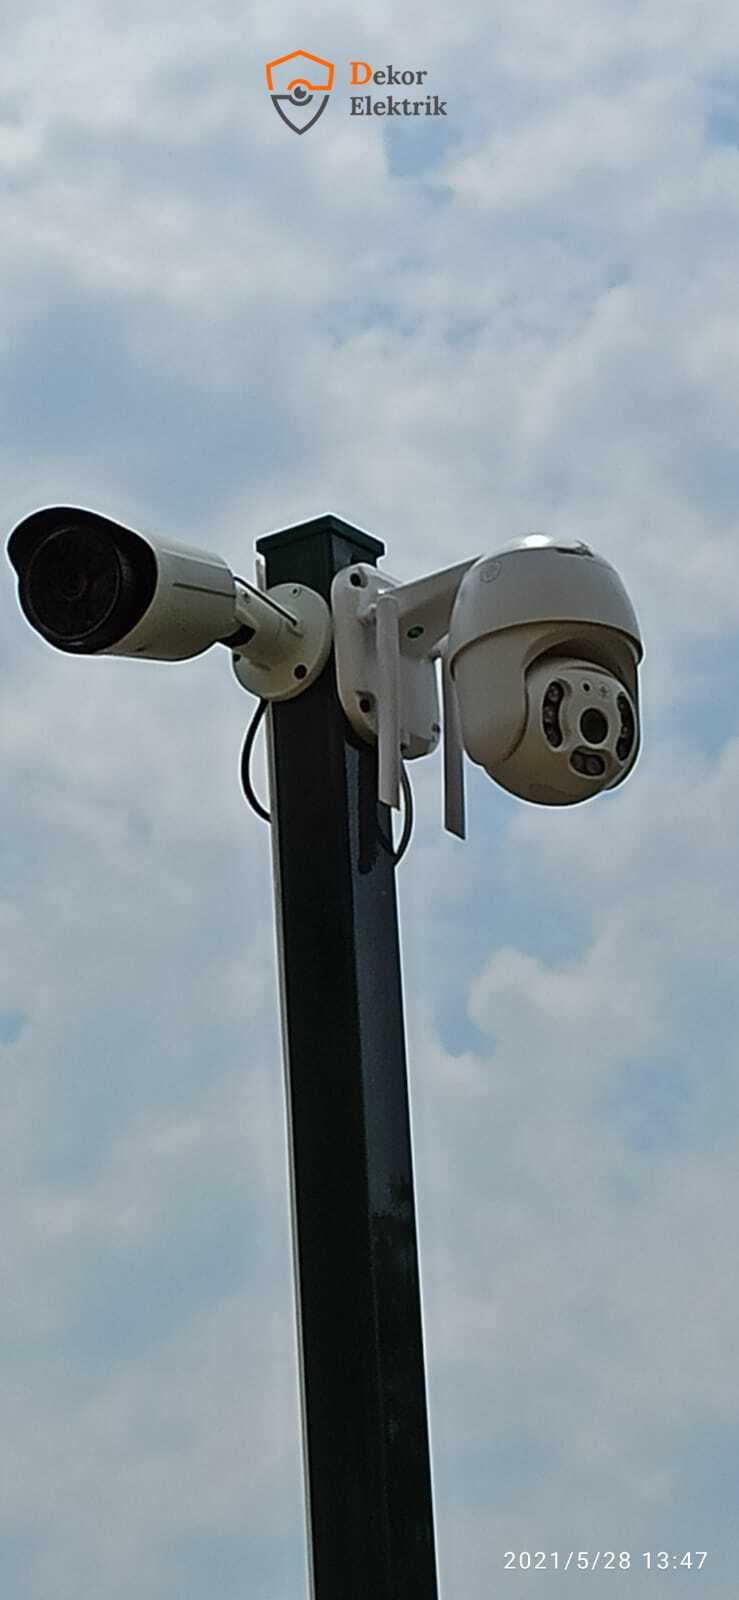 Kartal Güvenlik Kamerası Referans